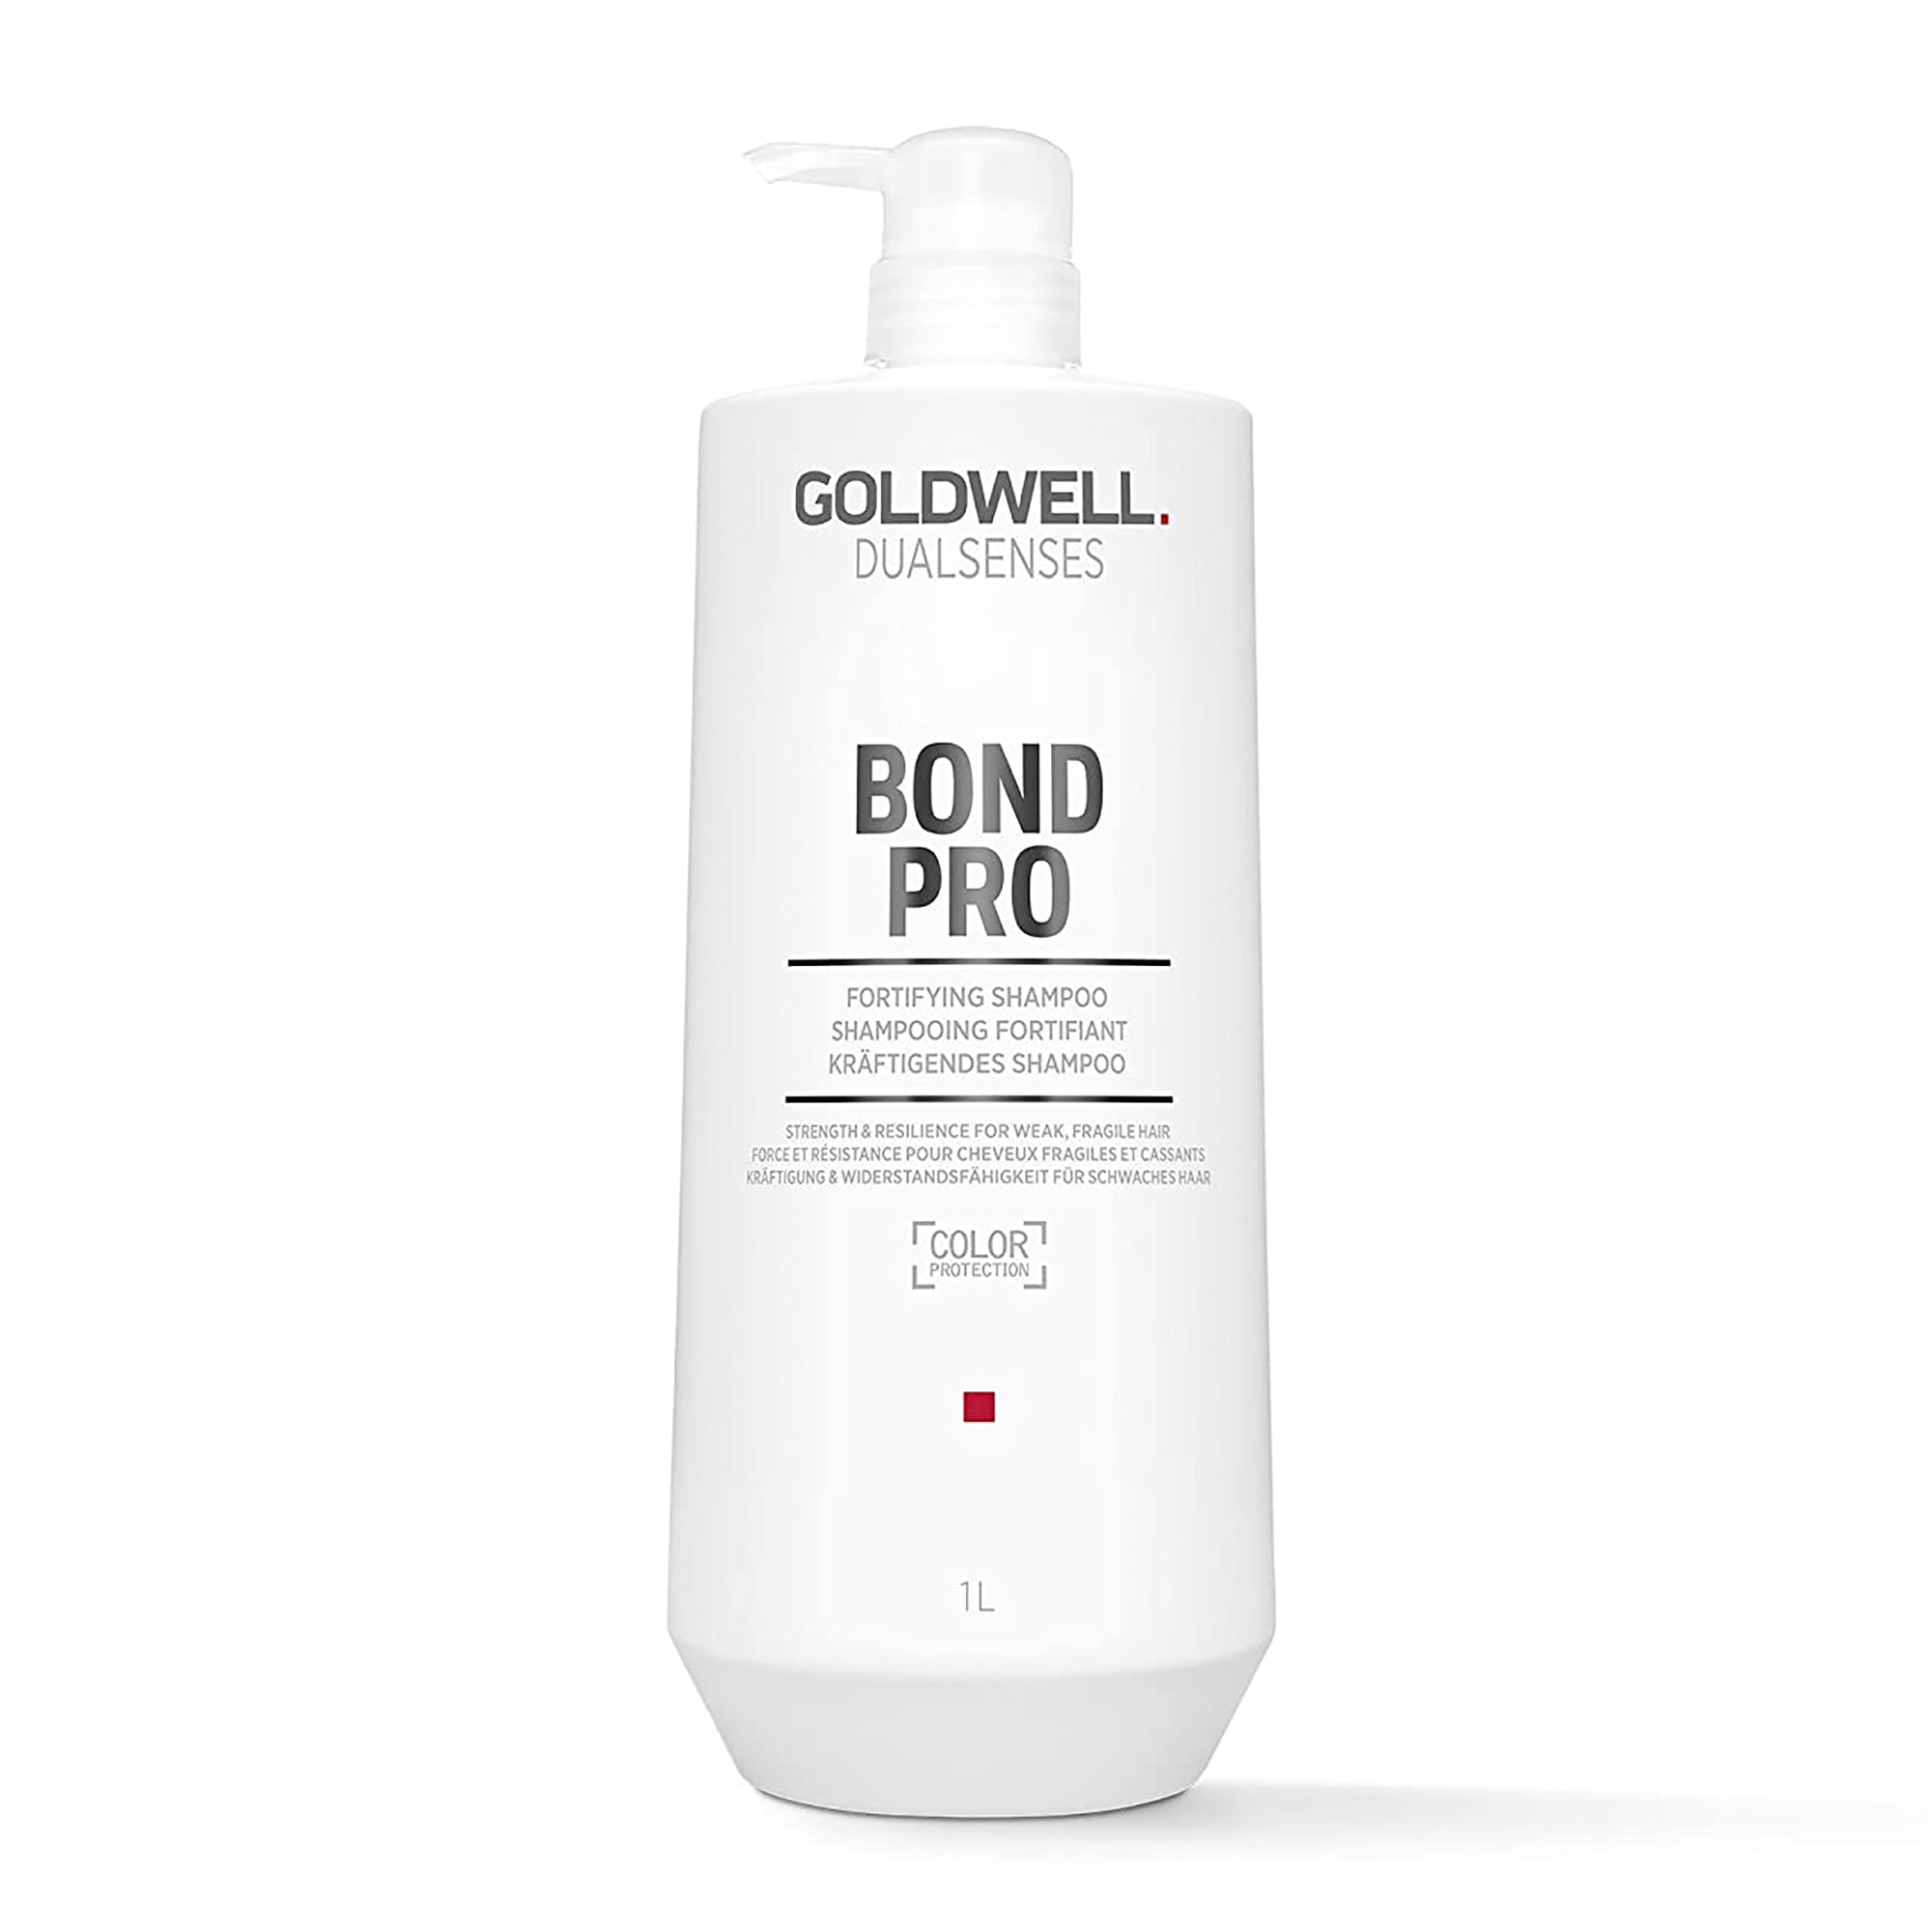 Goldwell Dual Sense Bond Pro Shampoo Liter / 33OZ